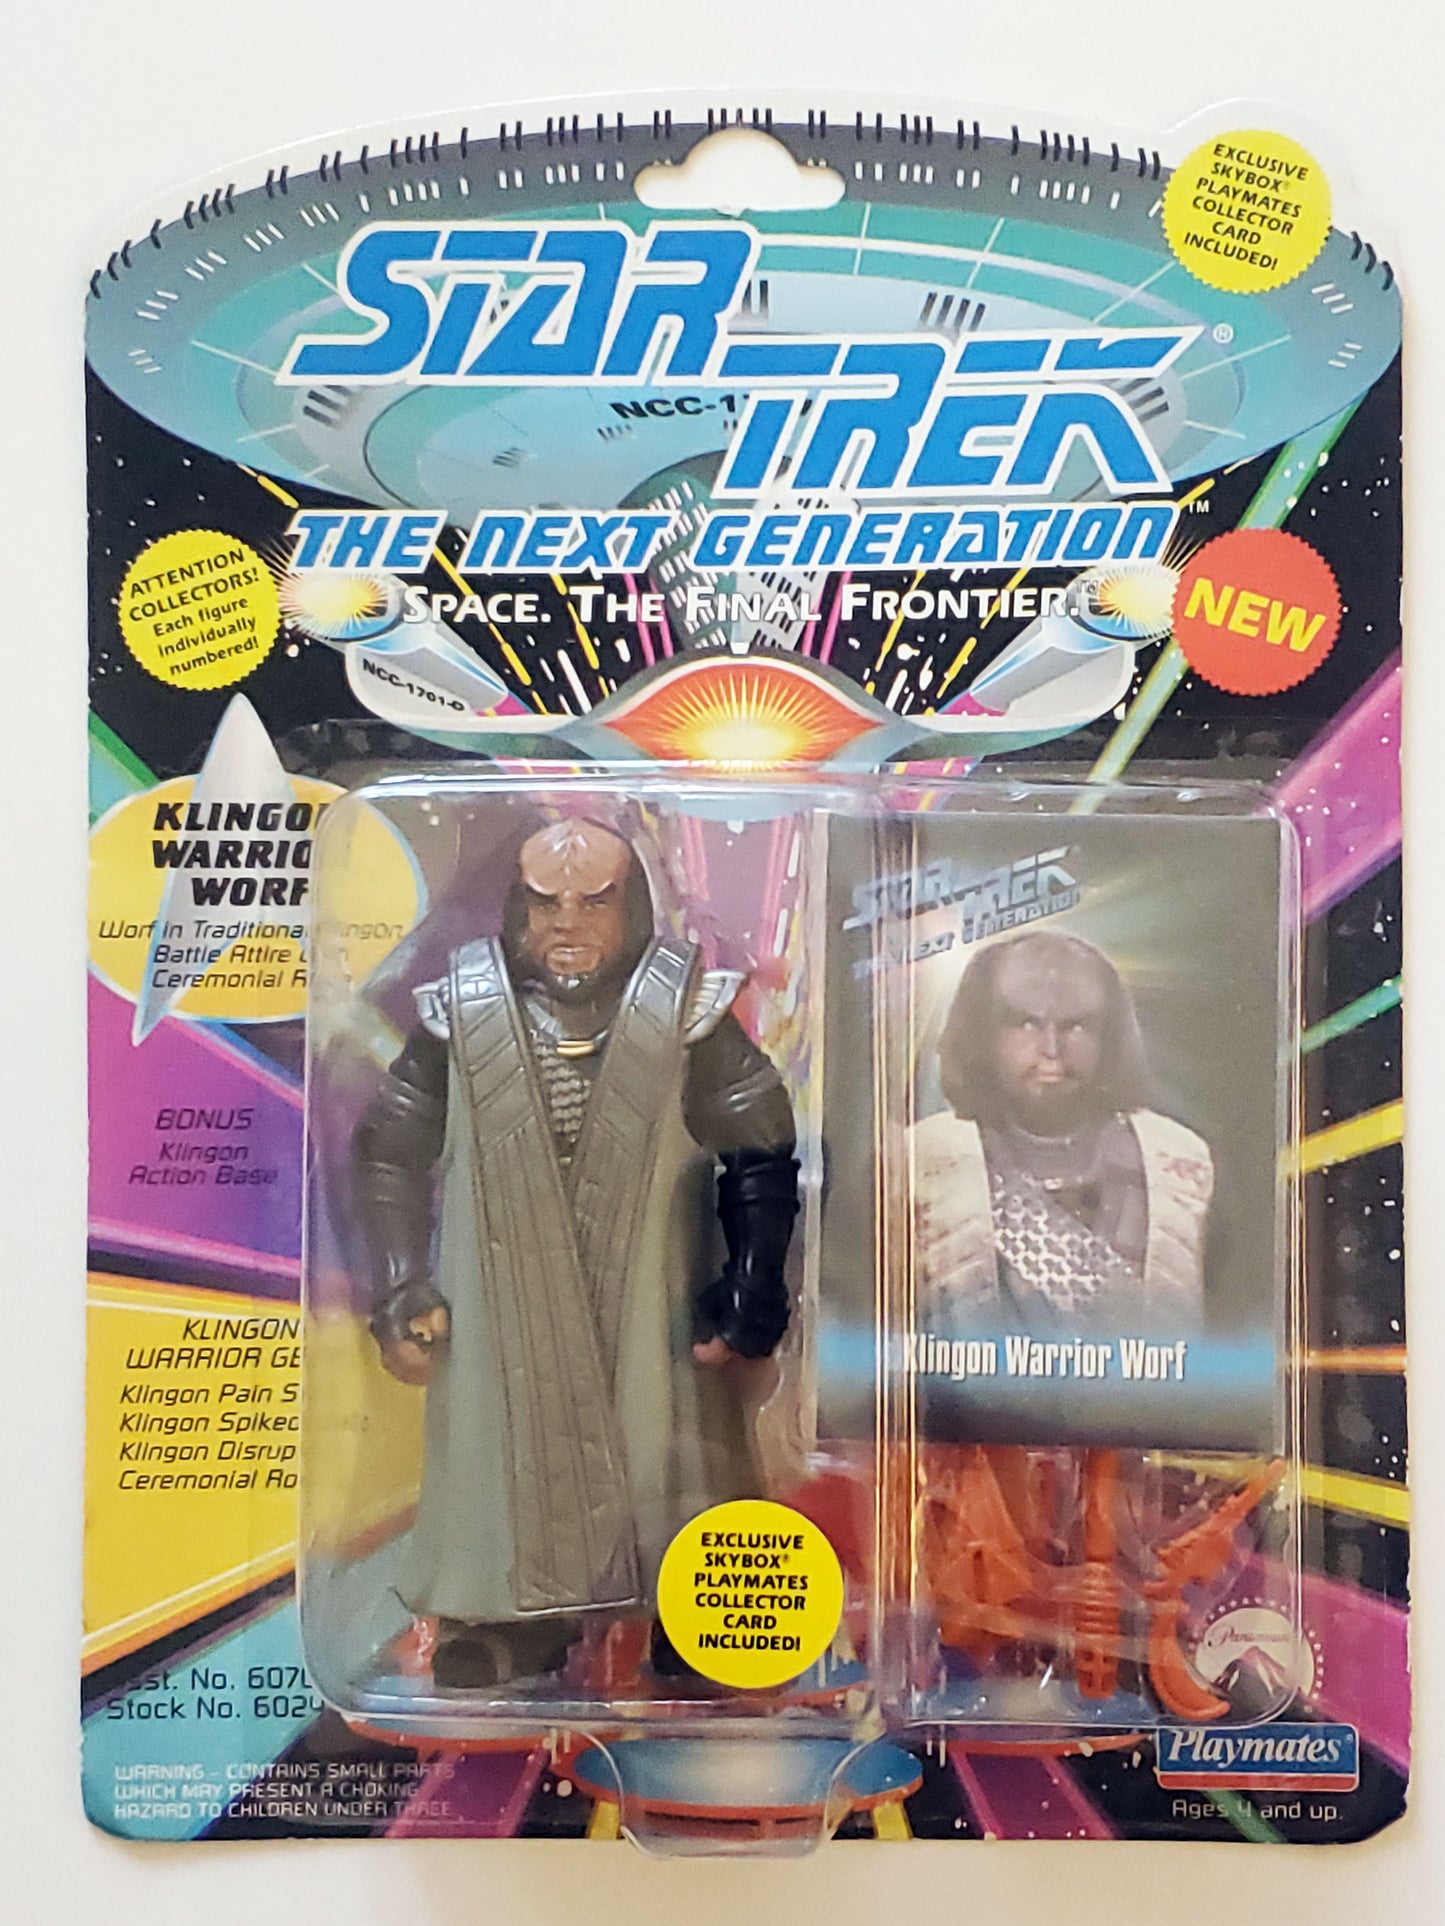 Klingon Warrior Worf from Star Trek: The Next Generation